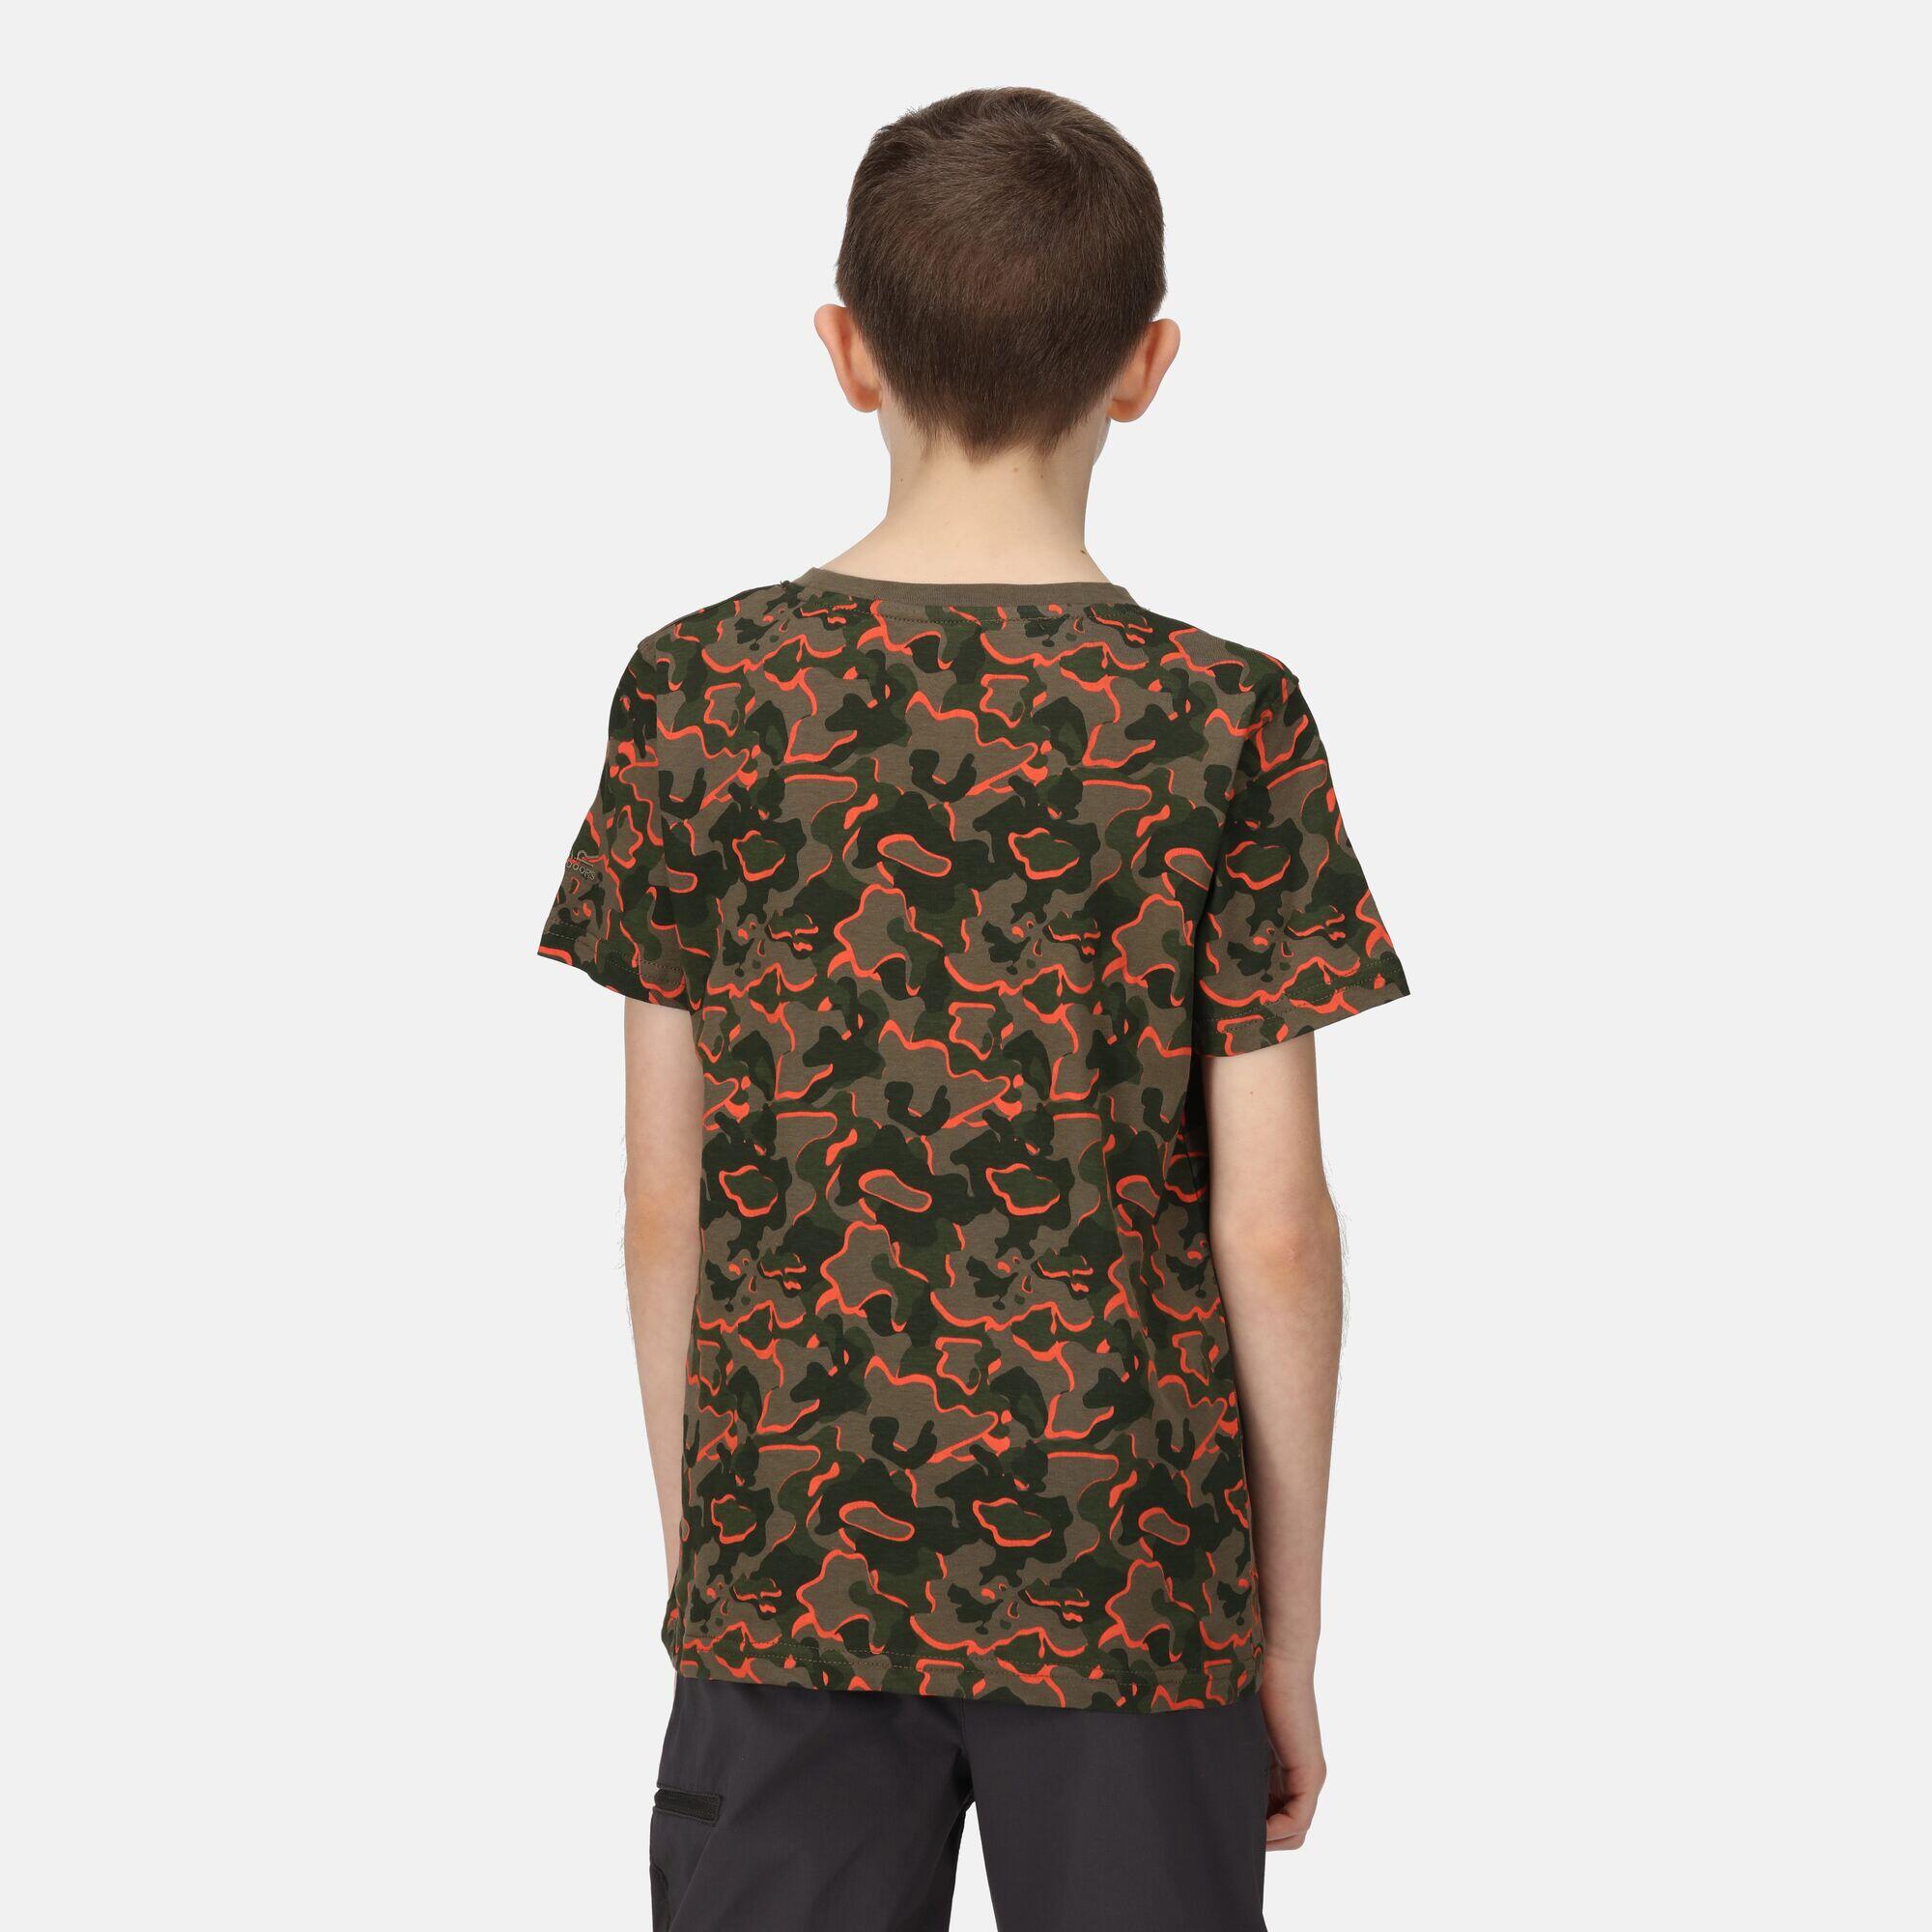 Bosley V Kids Walking Short Sleeve T-Shirt - Grape Leaf Green 2/5